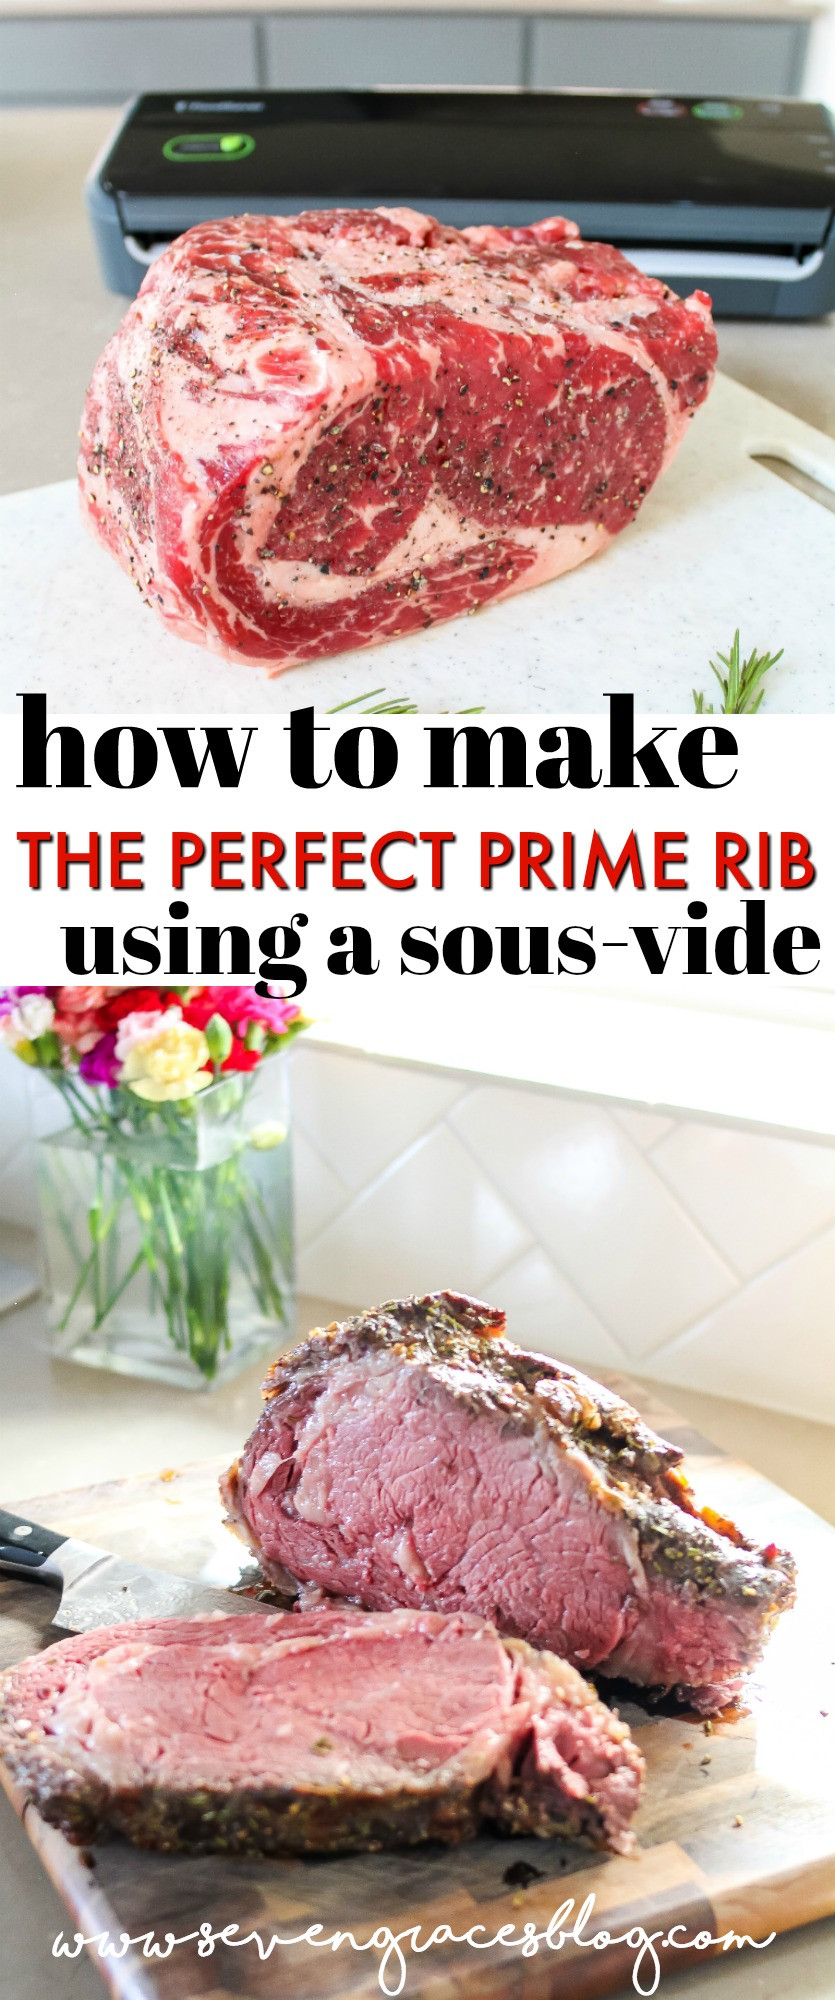 Sous Vide Prime Rib Recipe
 How to Make the Perfect Prime Rib Using a Sous Vide